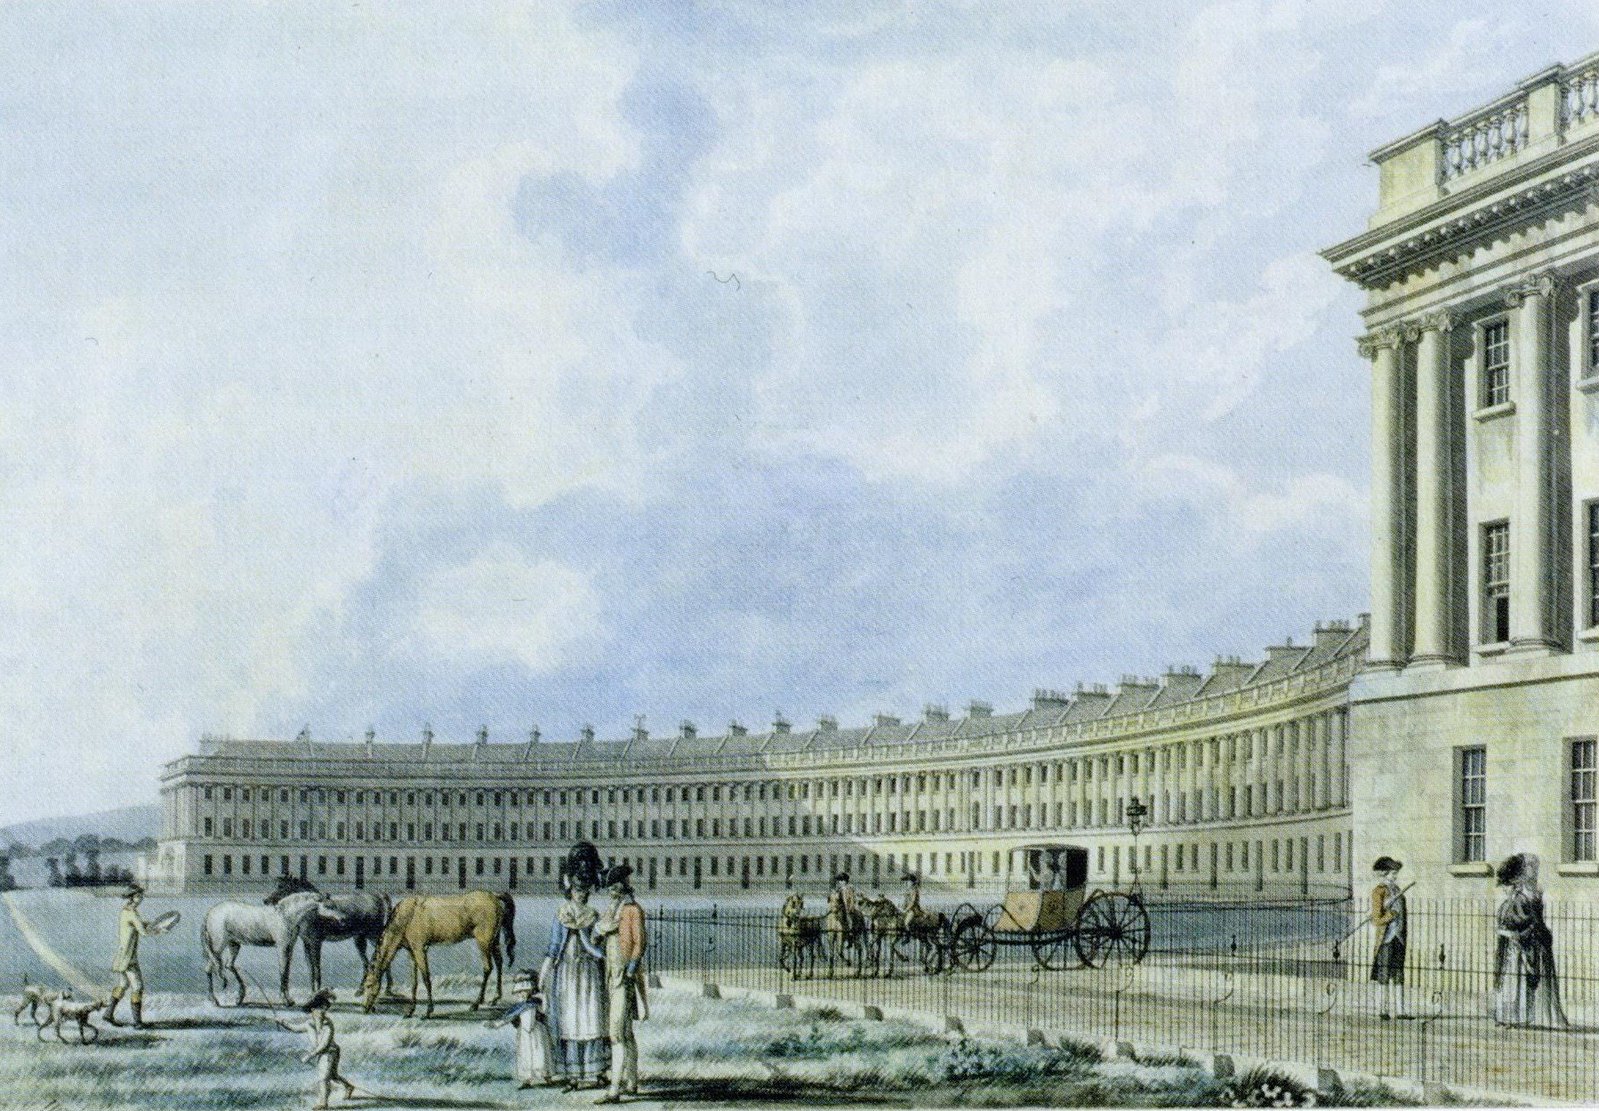 The Royal Crescent in Bath by Thomas Malton 1780